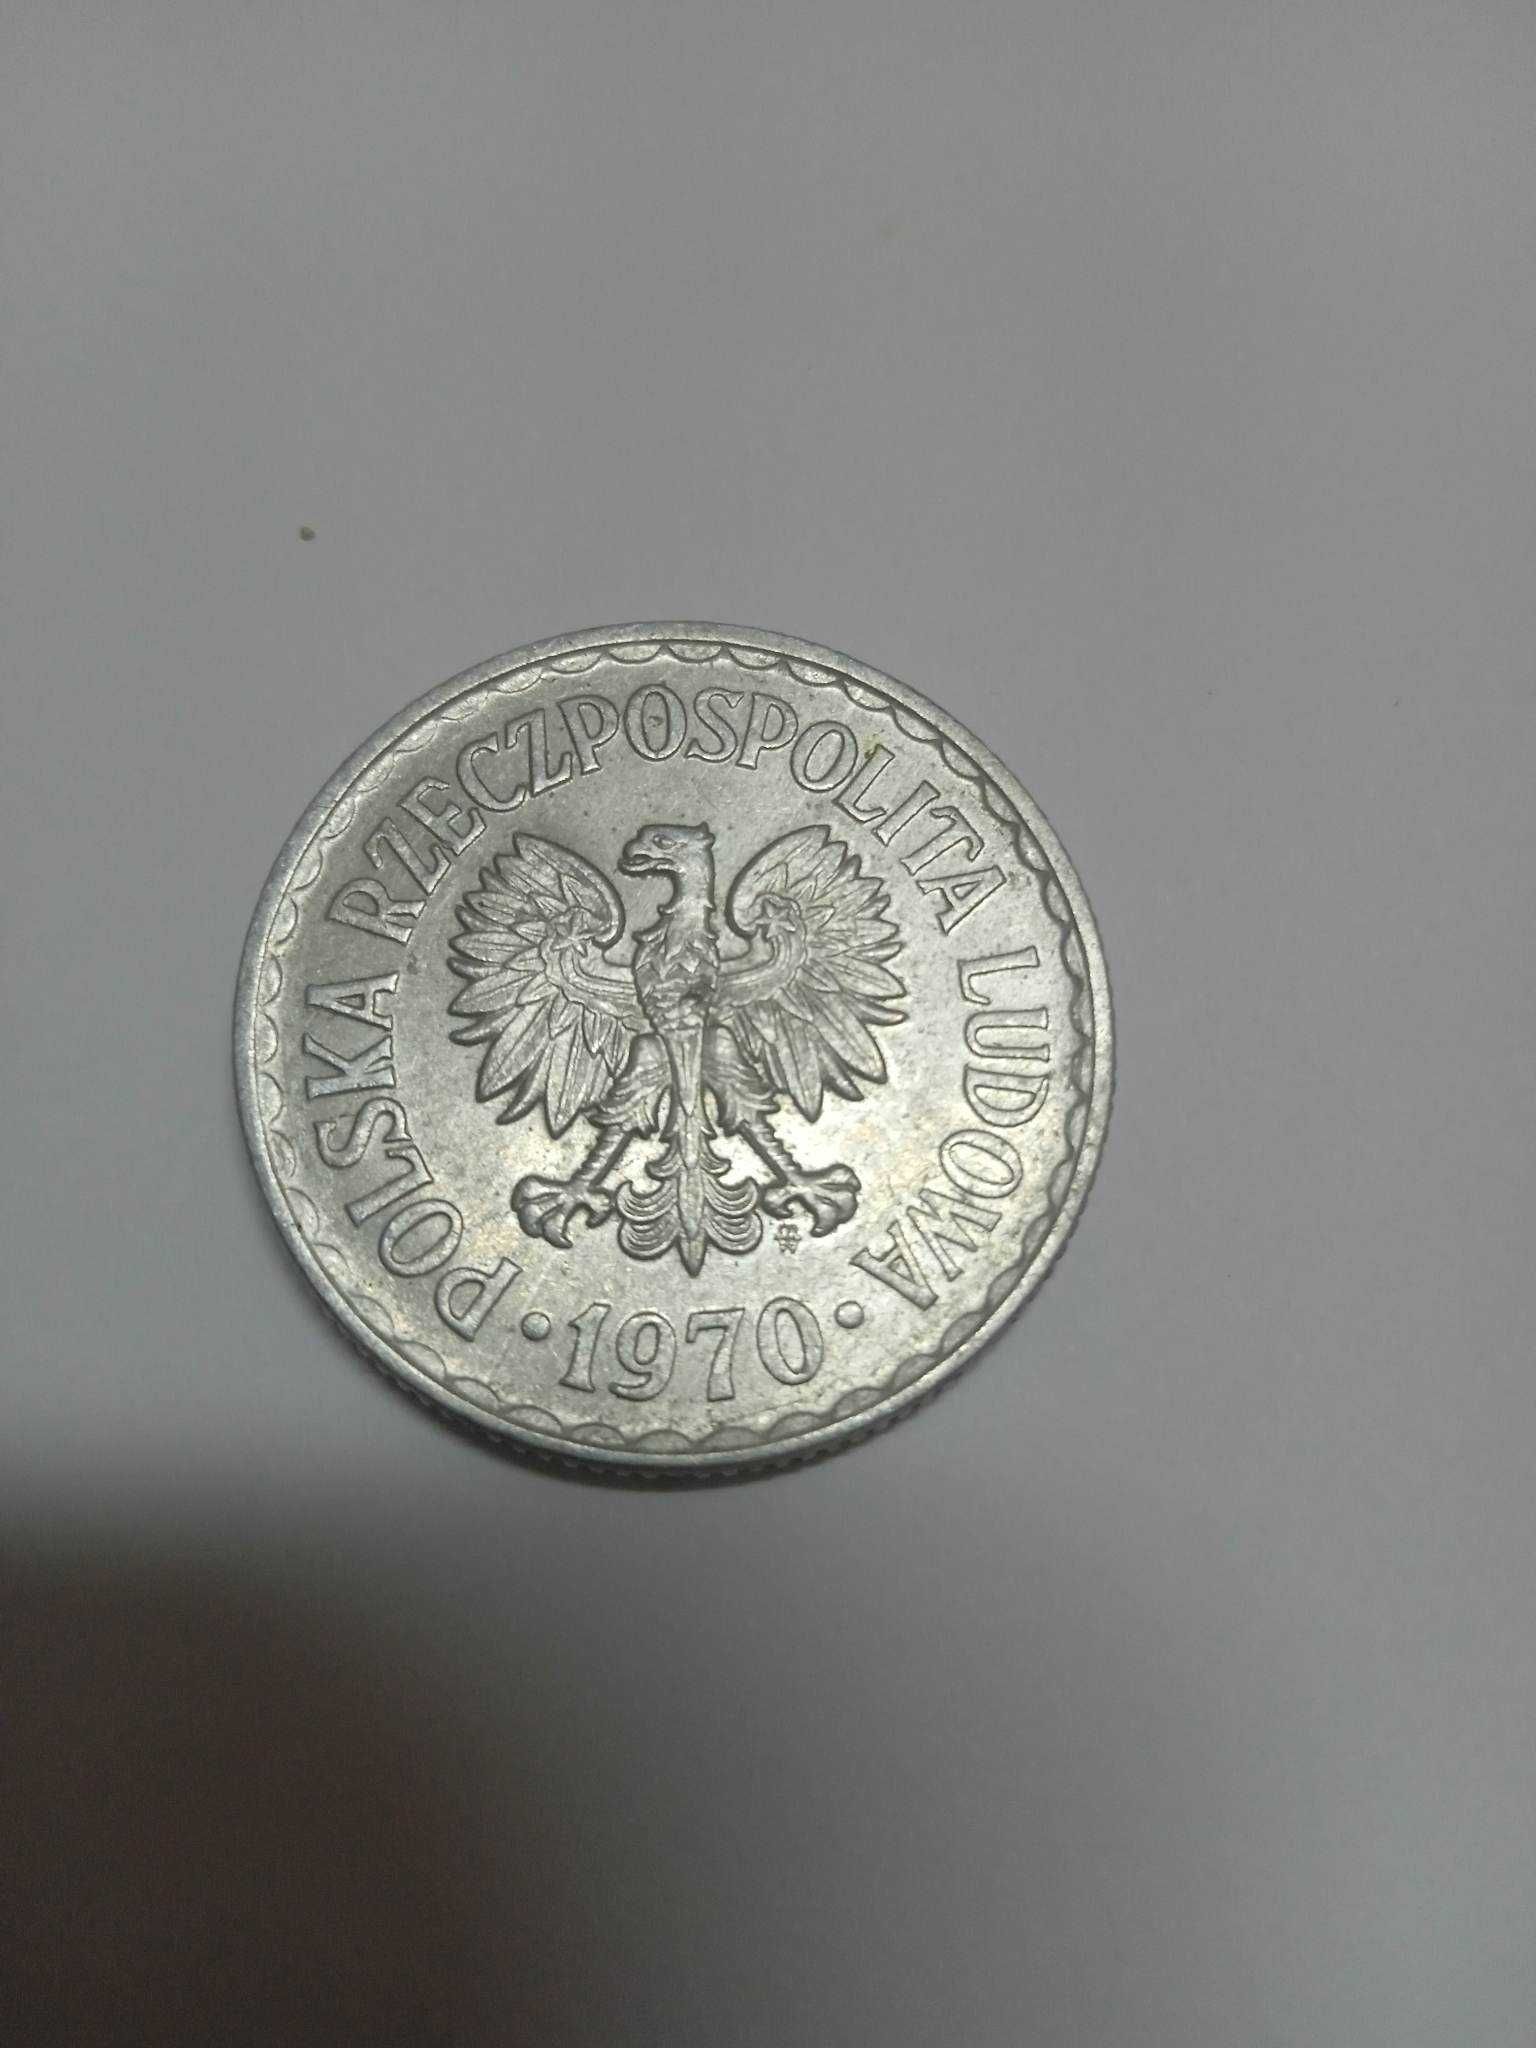 Moneta 1 zł z 1970 roku